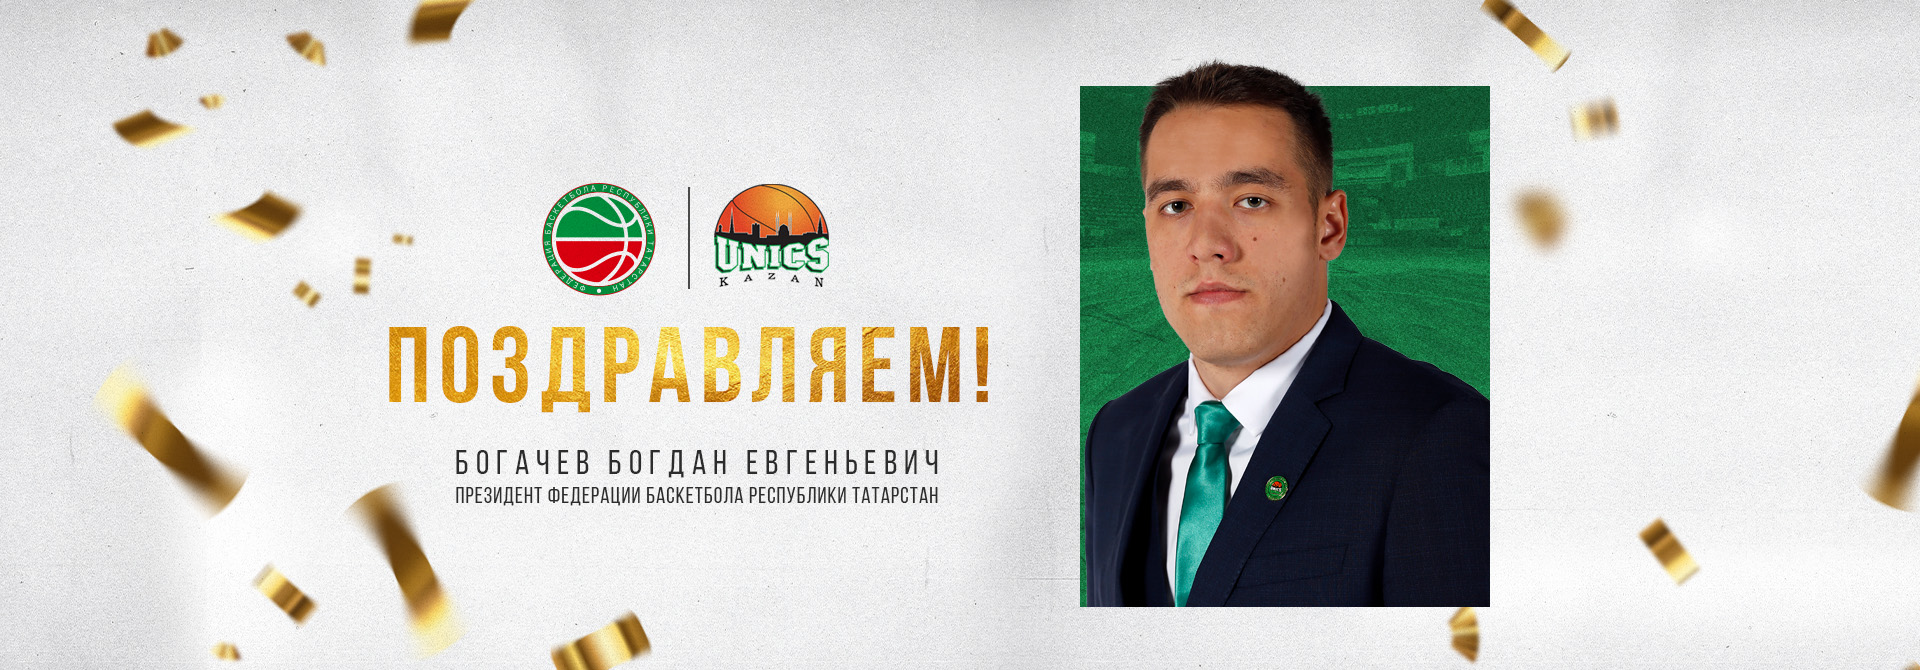 Bogdan Bogachev was elected President of the Basketball Federation of Tatarstan